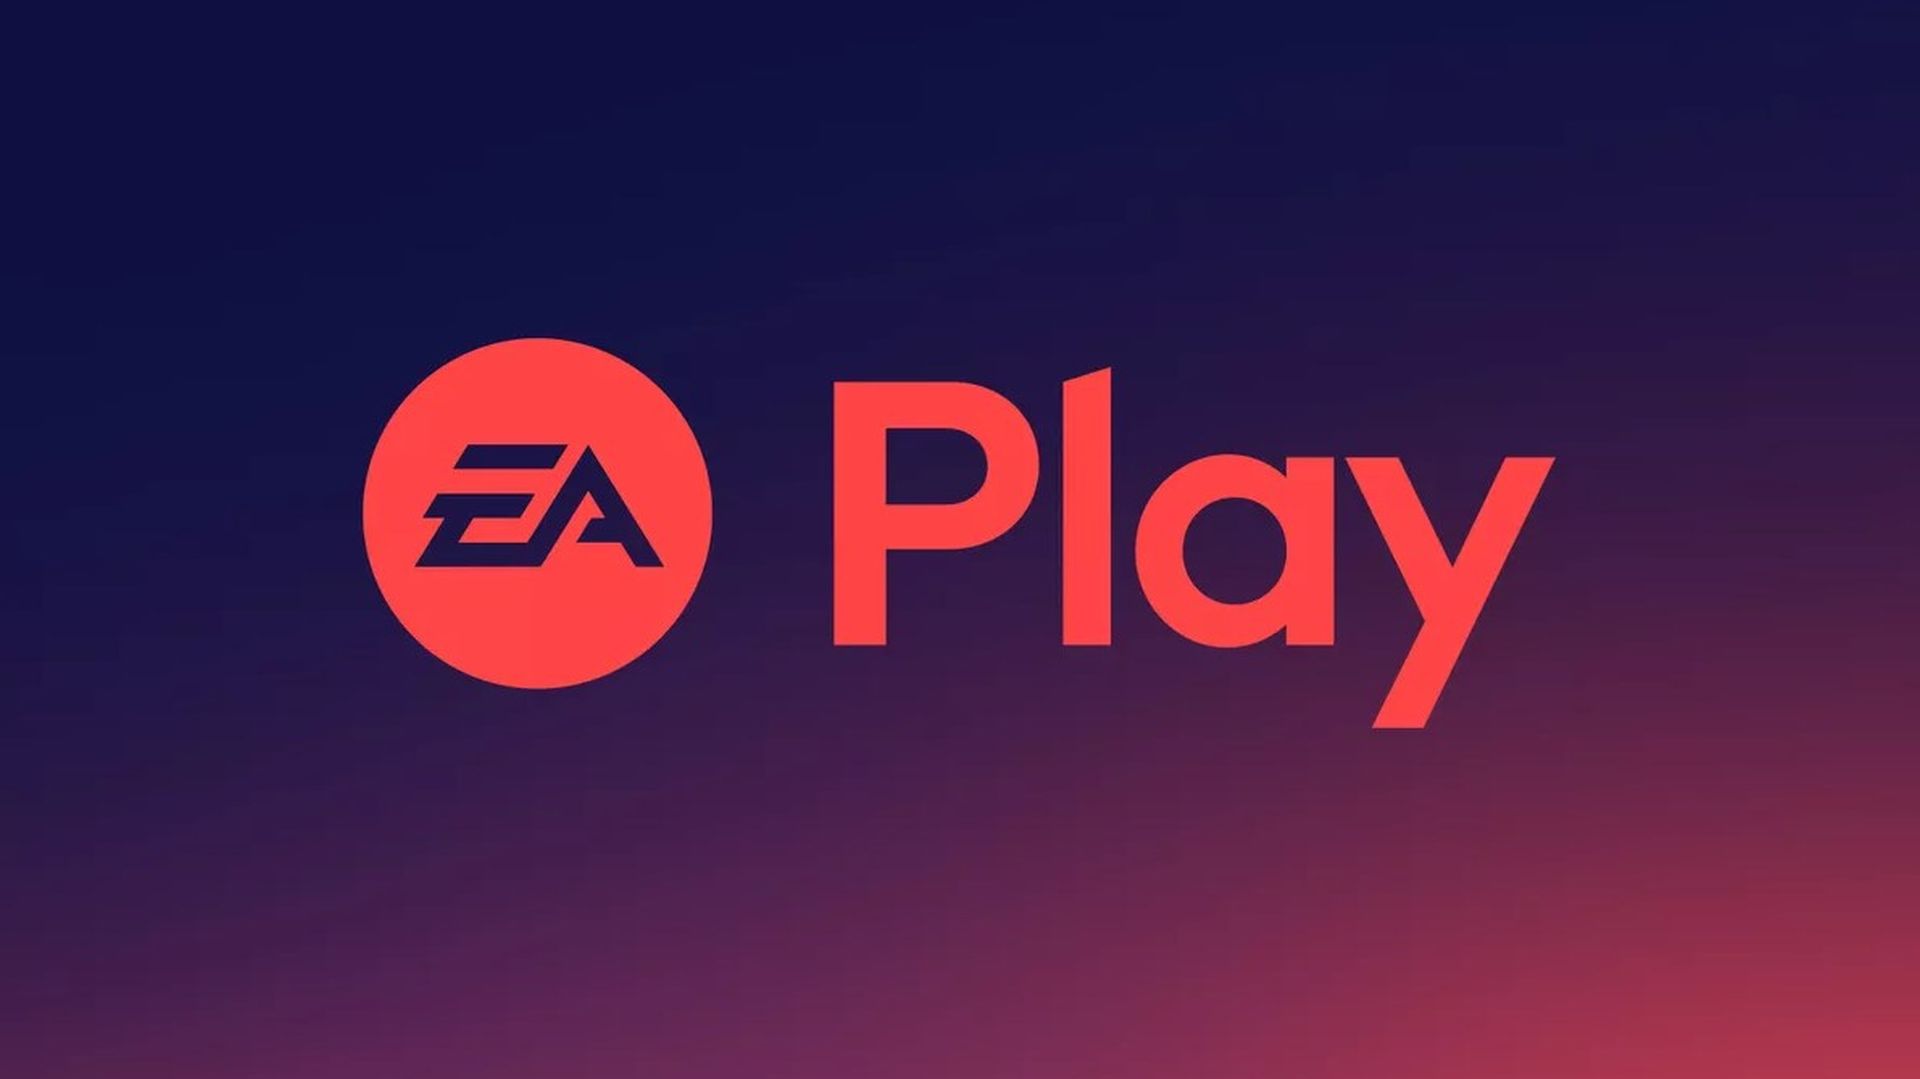 رسمياً ، تحتوي خدمة EA Play على 13 مليون لاعب نشط حالياً !